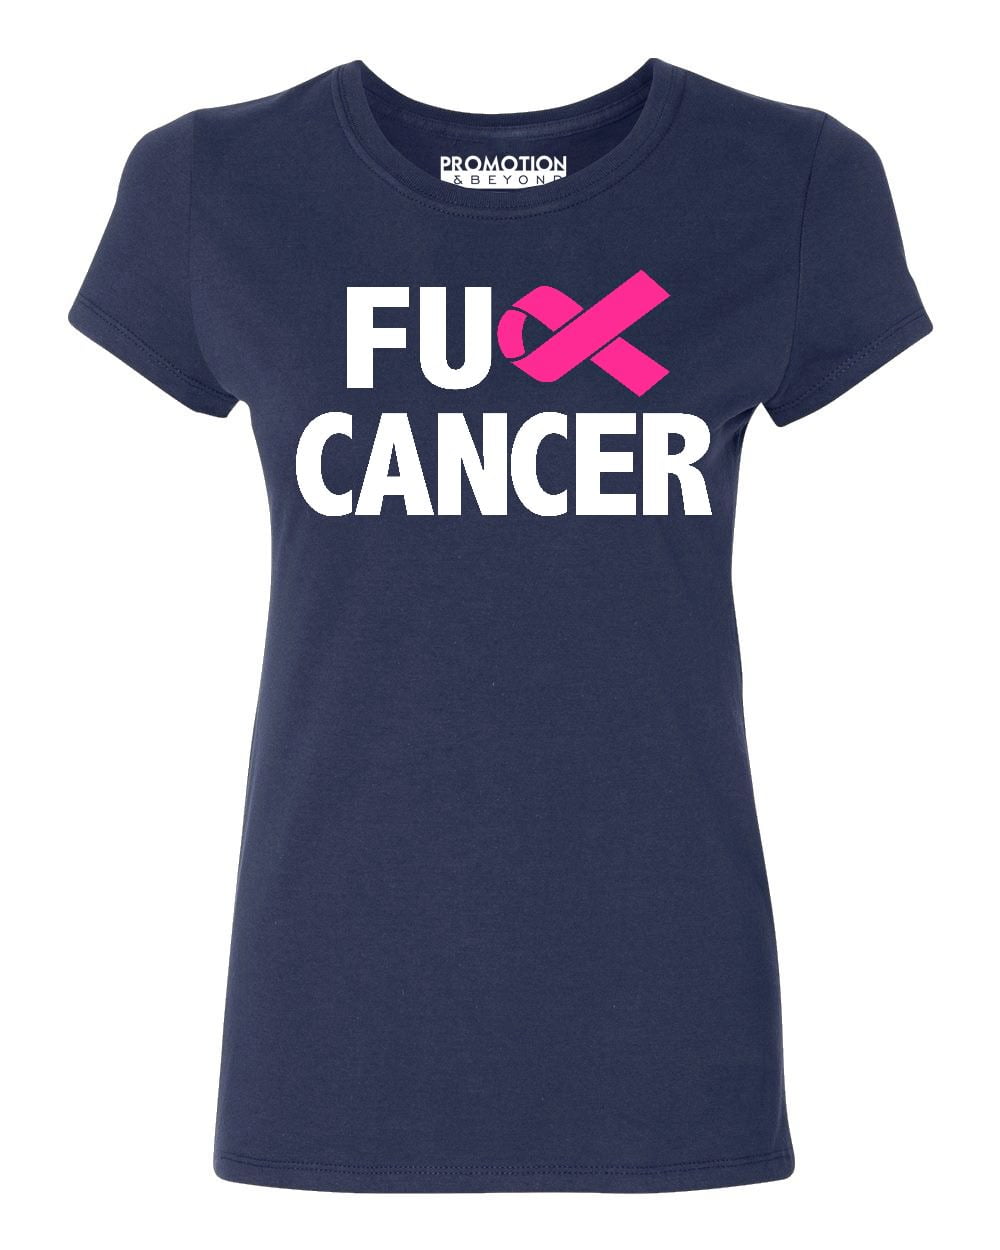 Promotion & Beyond F*ck Cancer Pink Ribbon Awareness Women's 